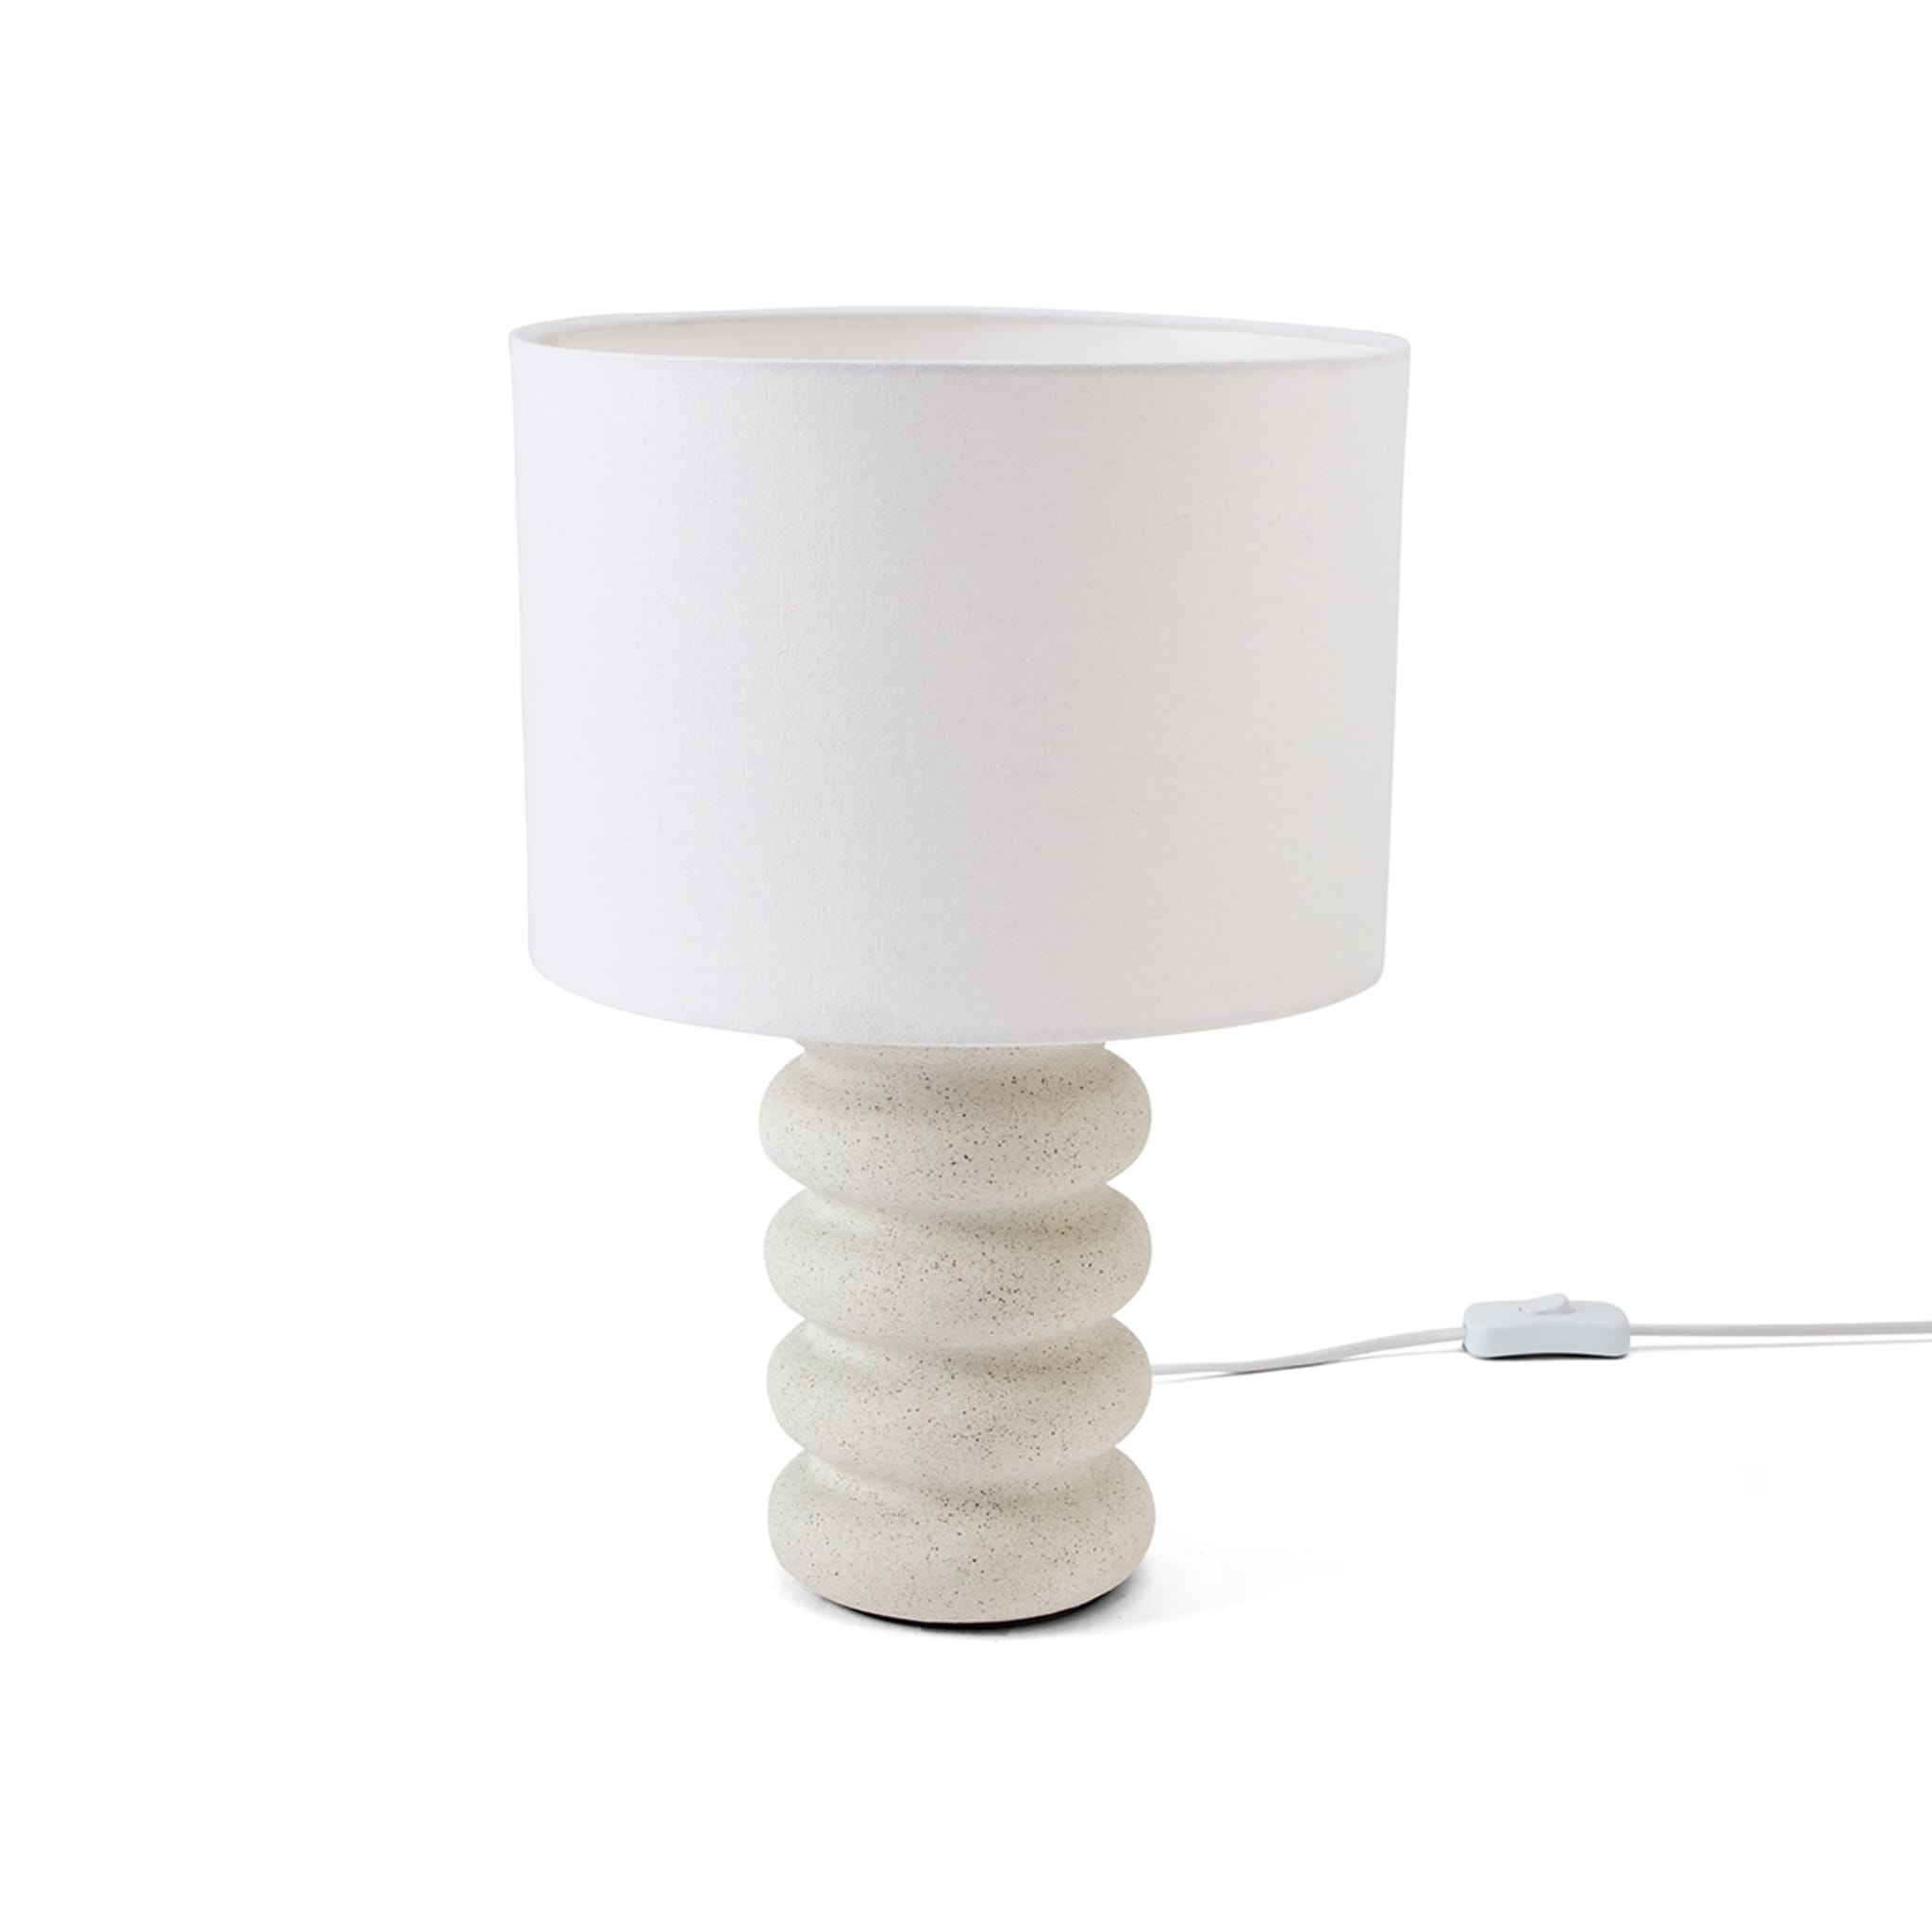 Hudson Table Lamp - Kmart